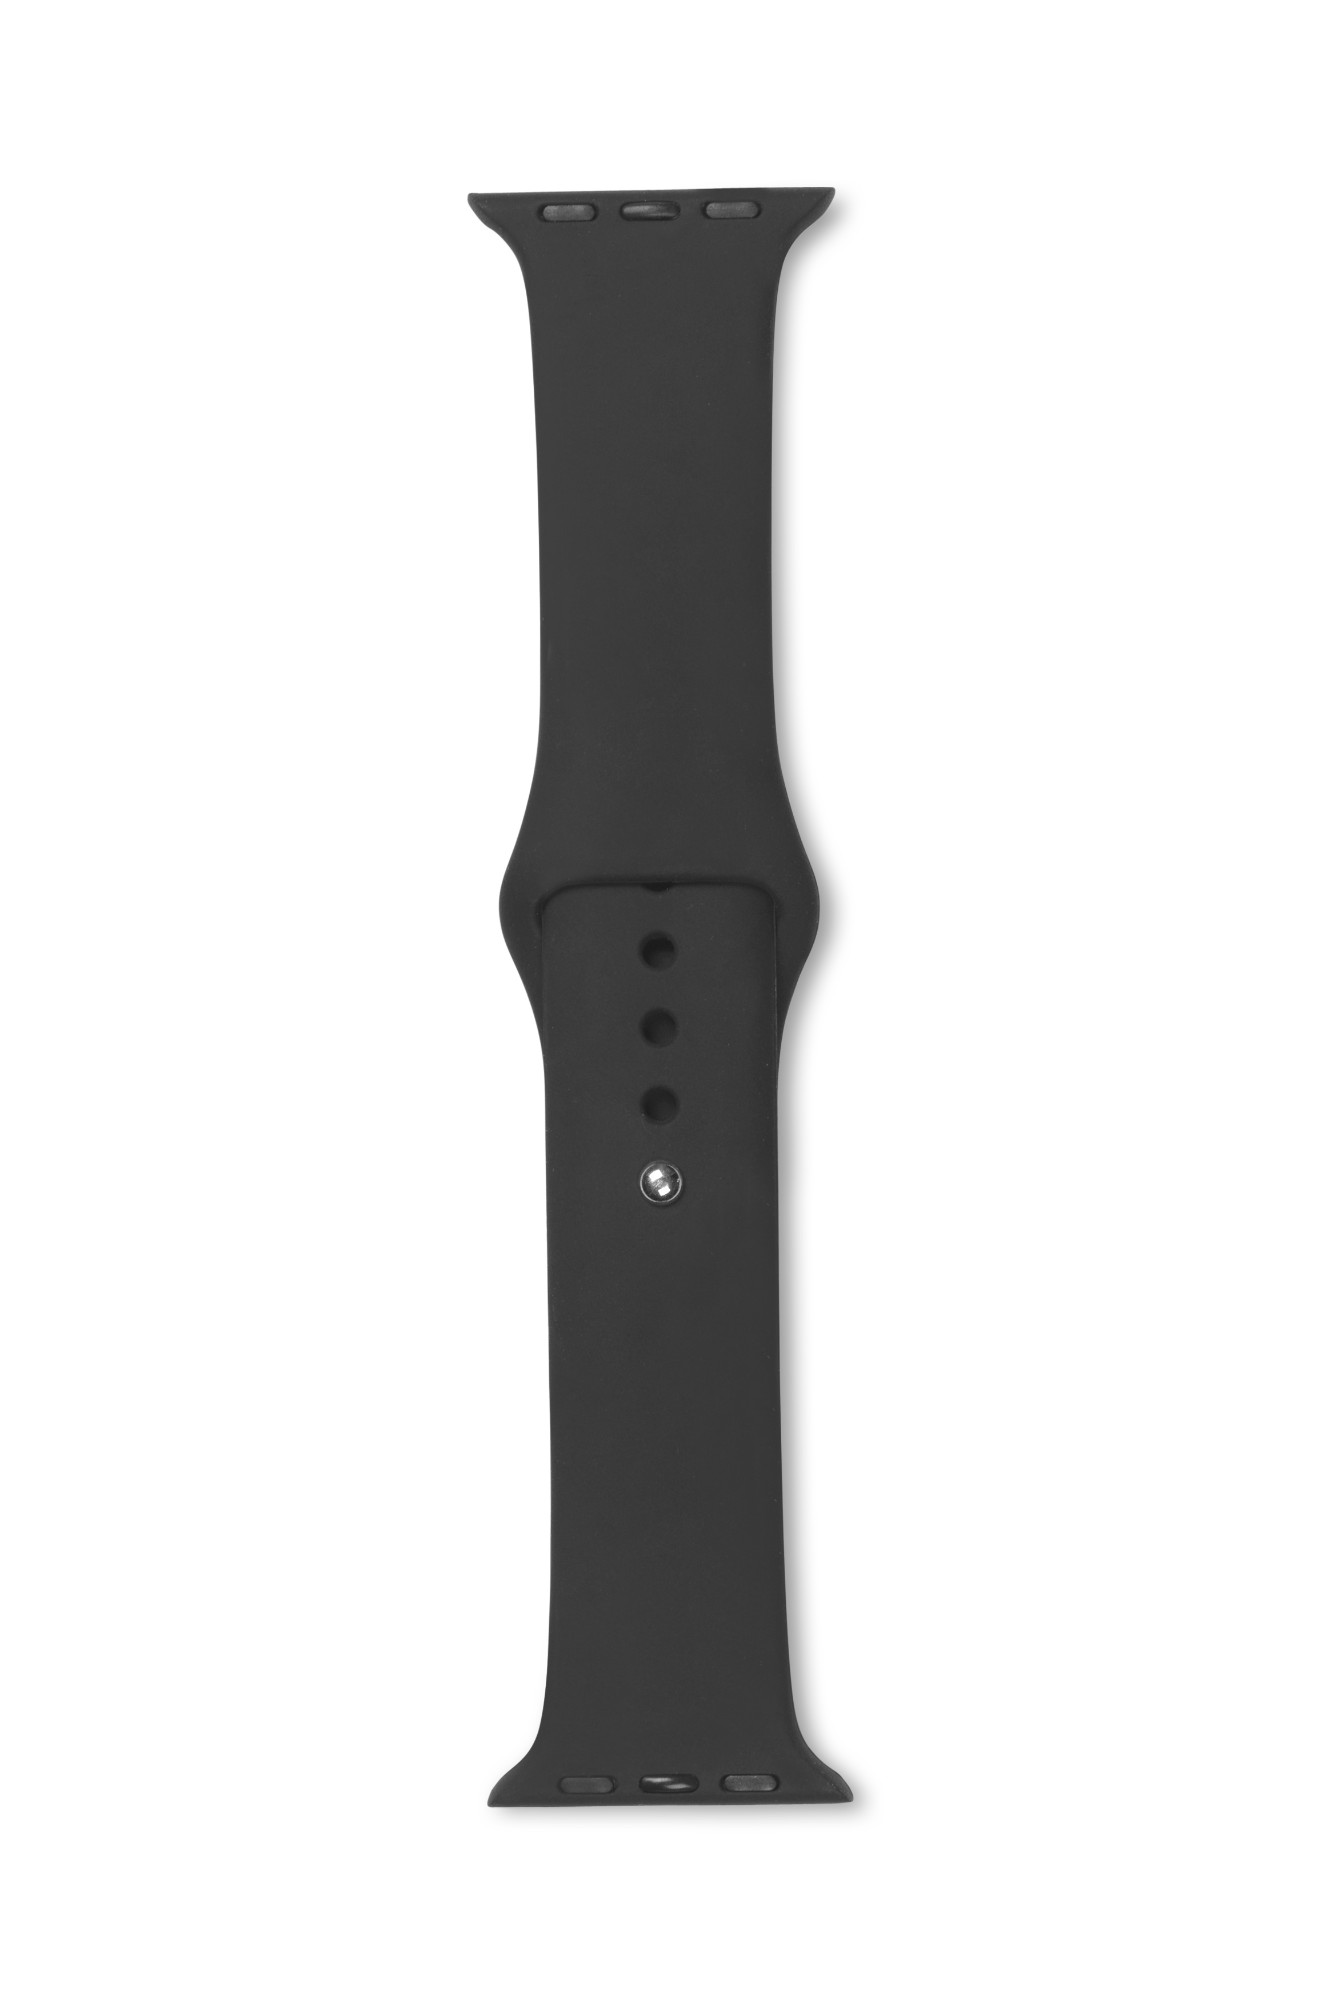 eSTUFF Apple Silicone Watch Band Black